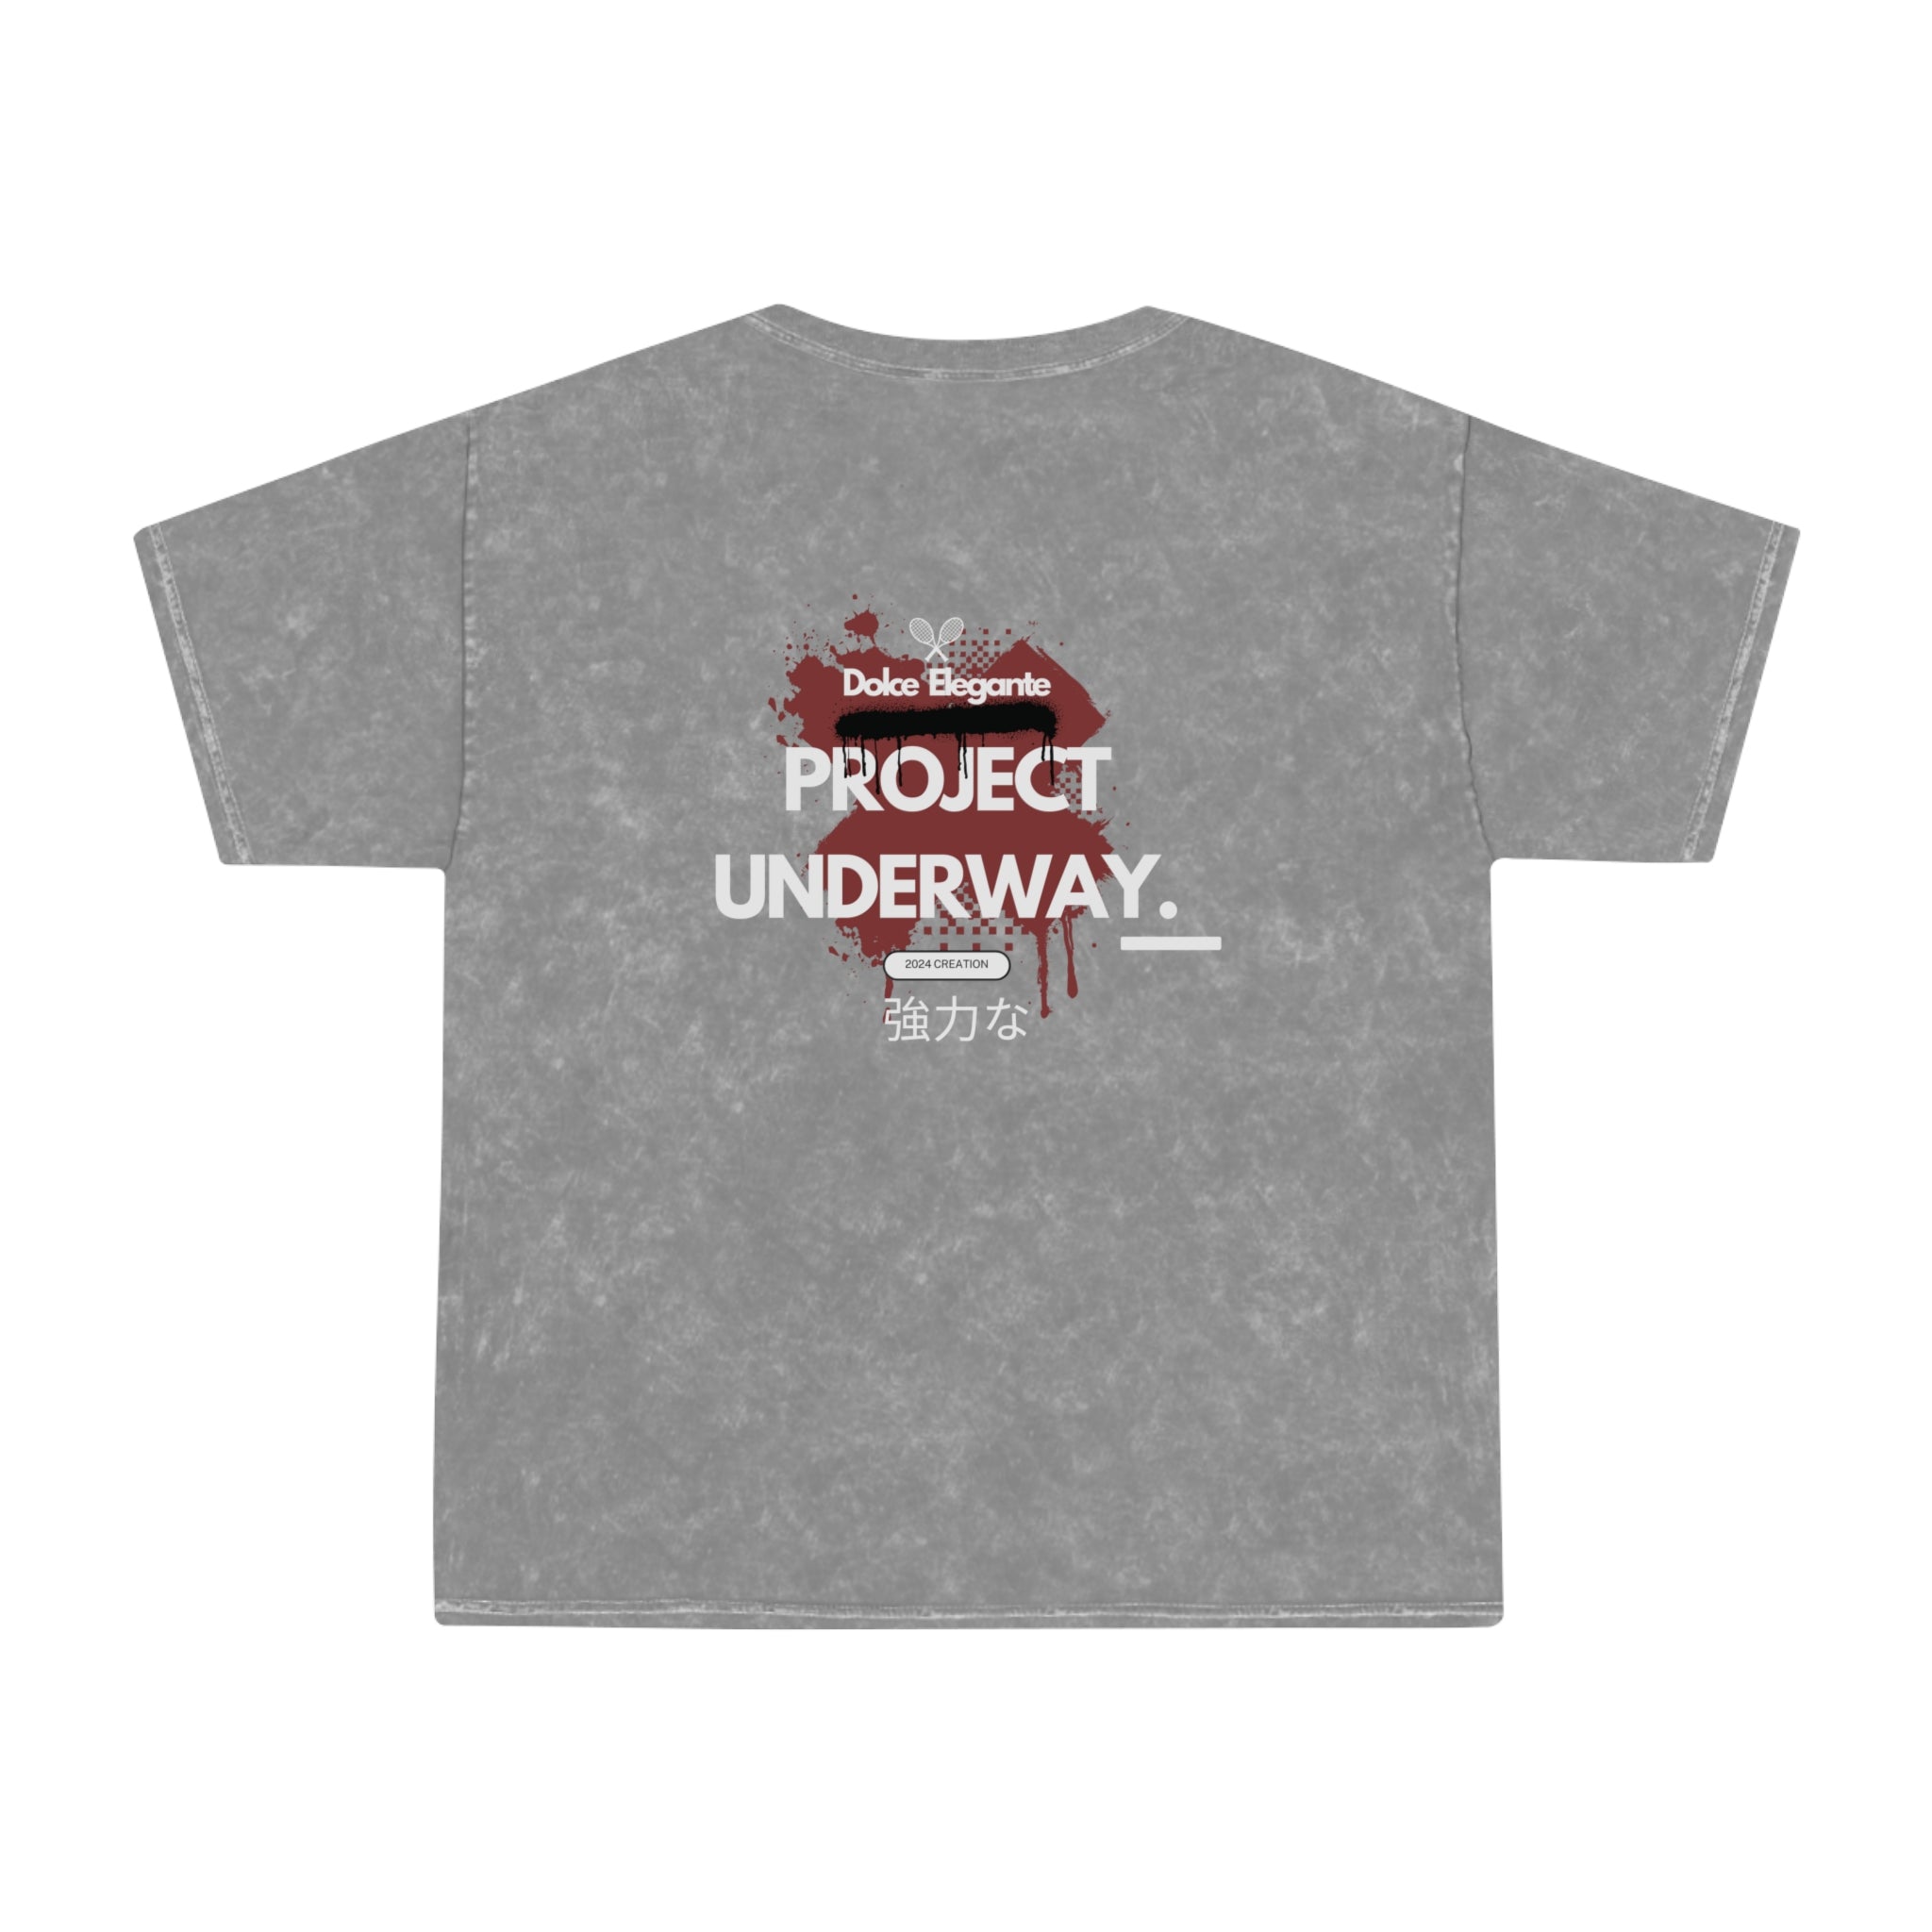 PROJECT UNDERWAY- Dolce Elegante T-Shirt - Dolce Elegante